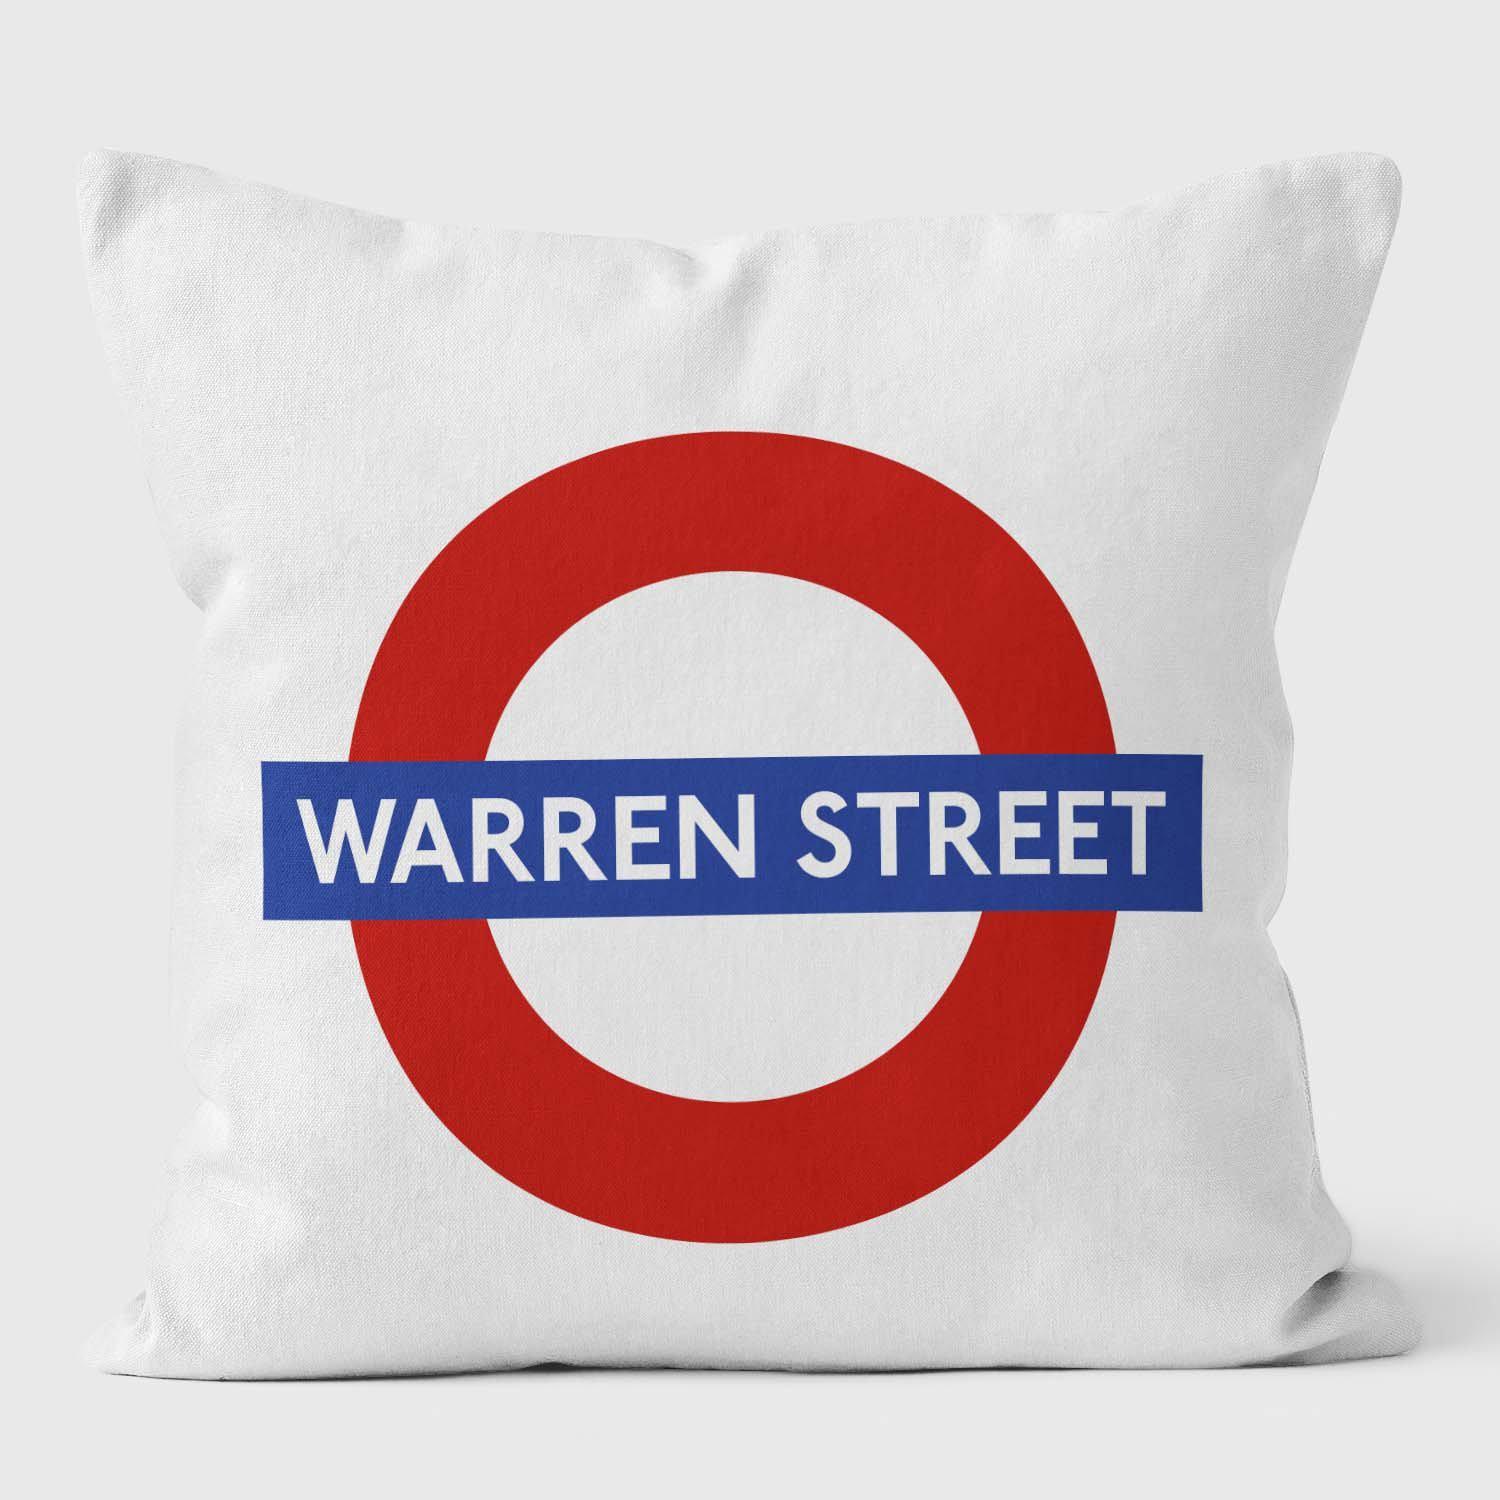 Warren Street London Underground Tube Station Roundel Cushion - Handmade Cushions UK - WeLoveCushions